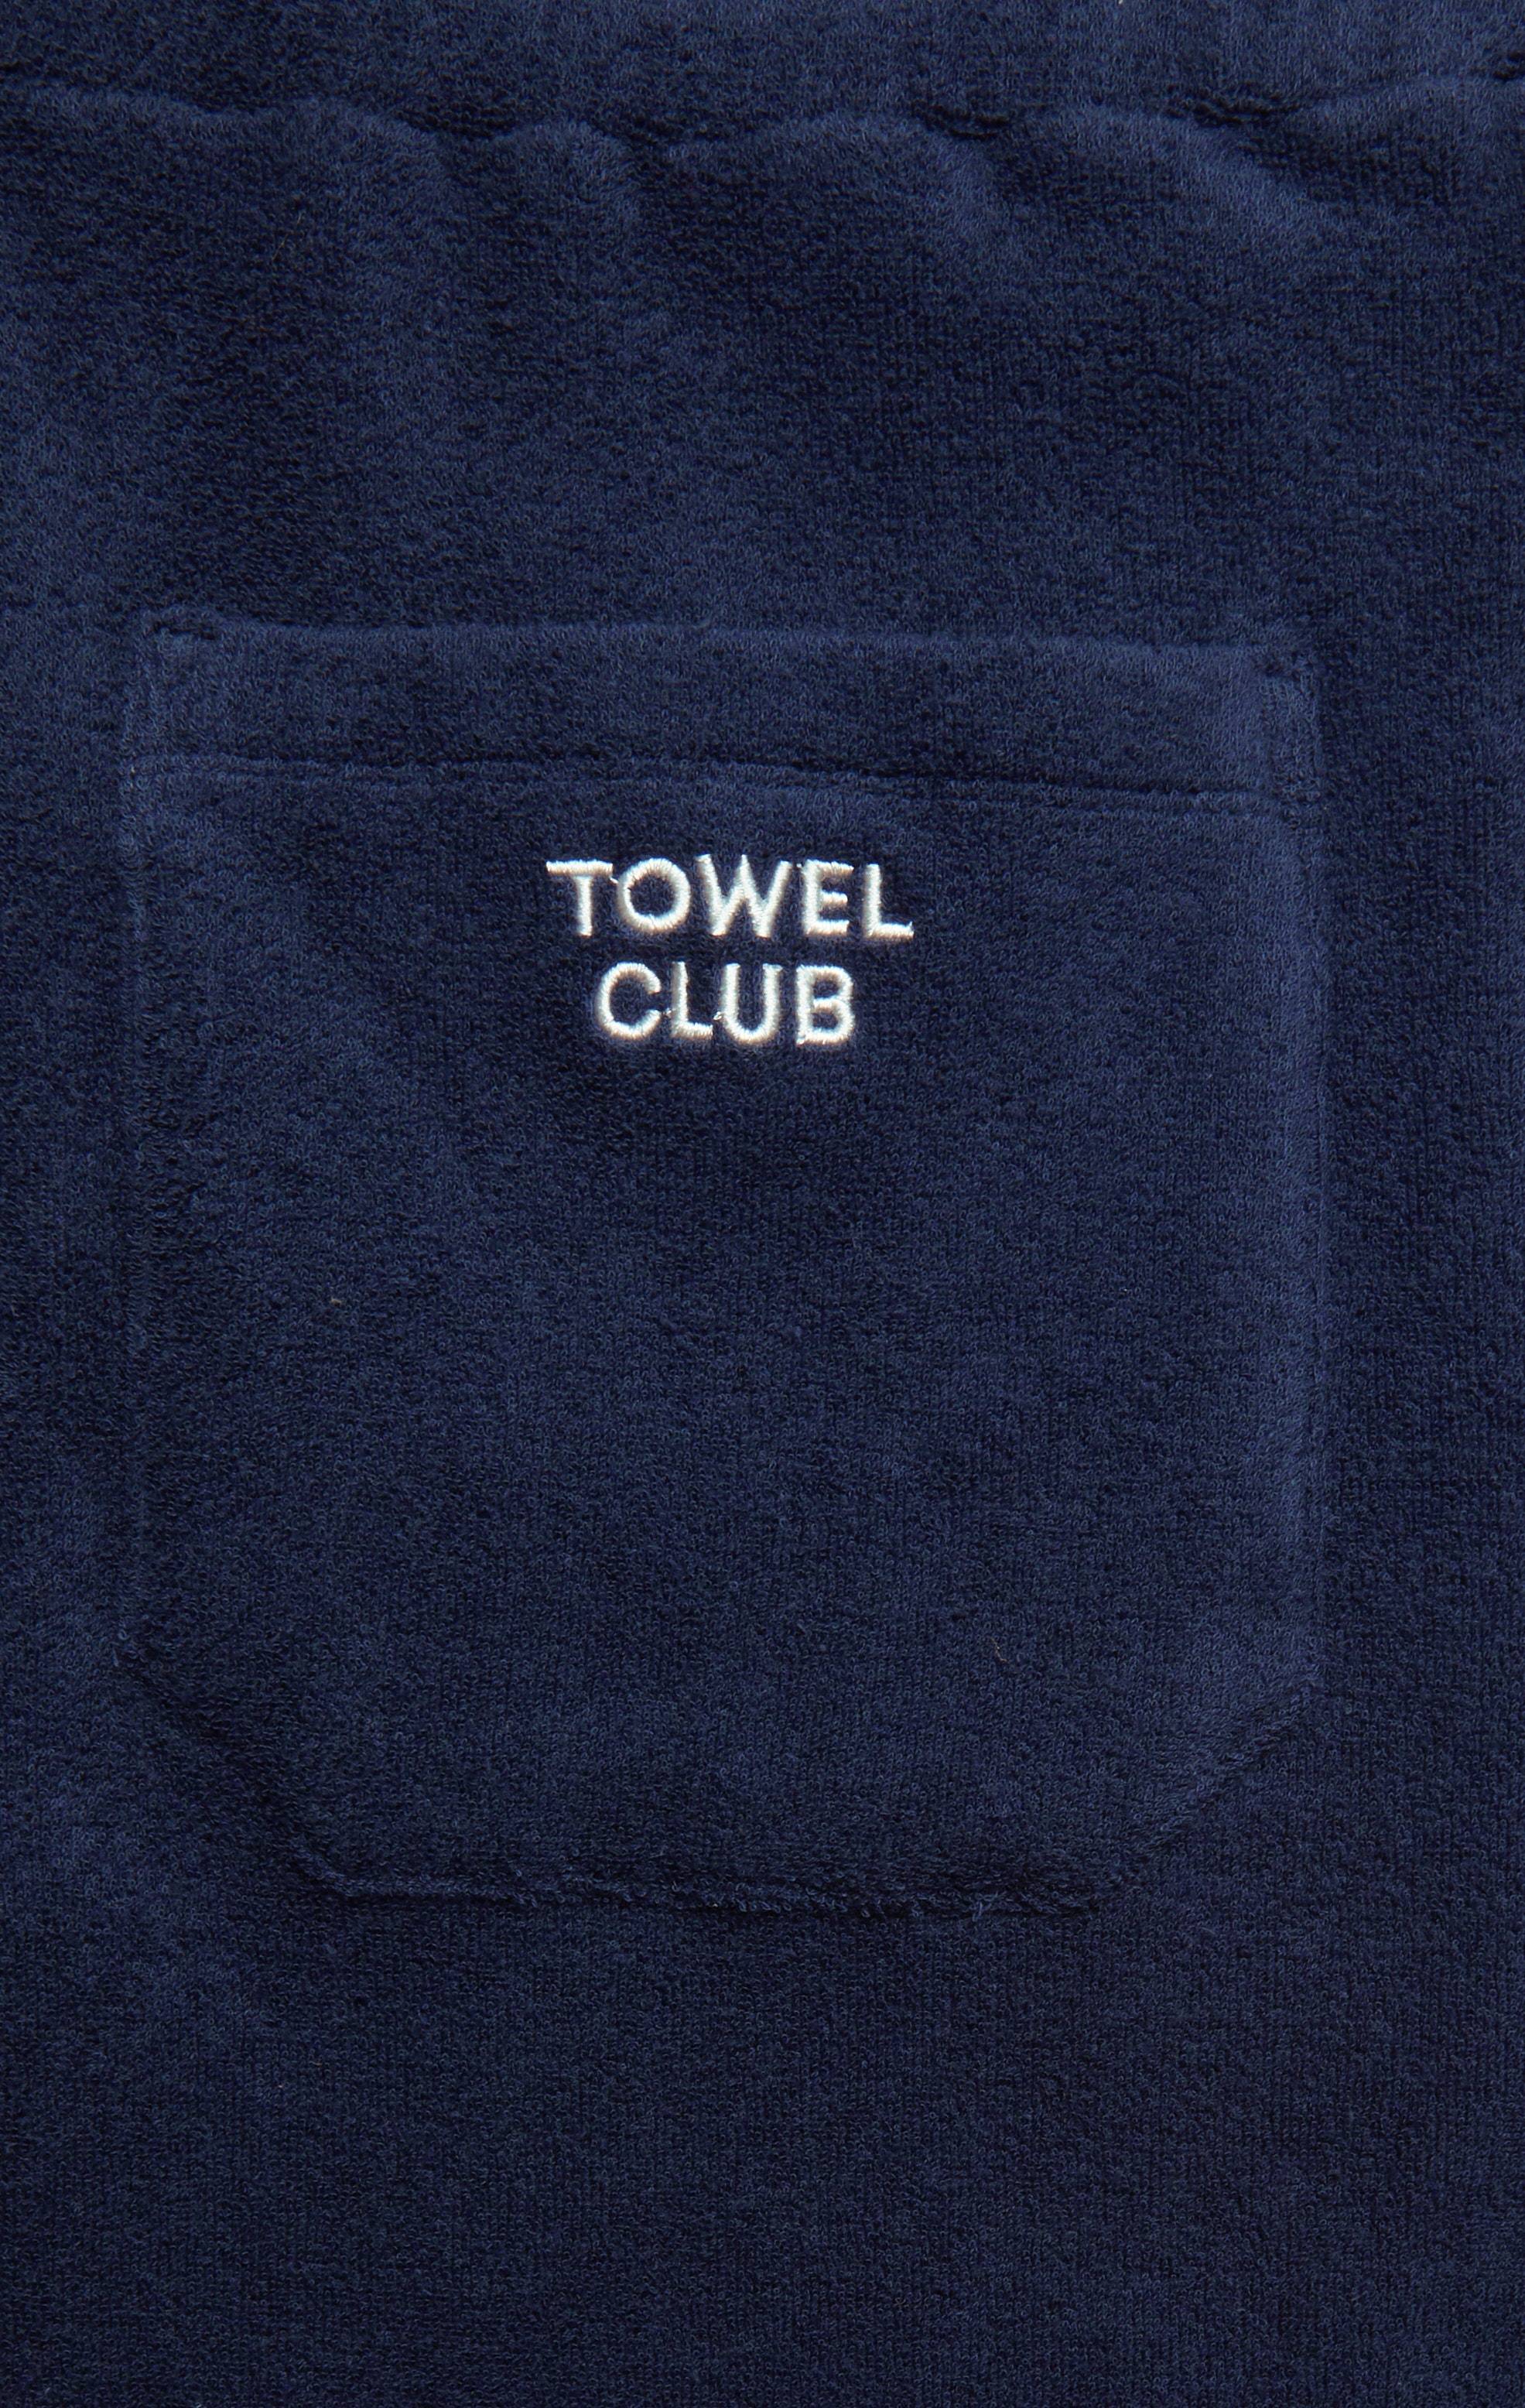 Onepiece Towel Club Shorts Navy - 3